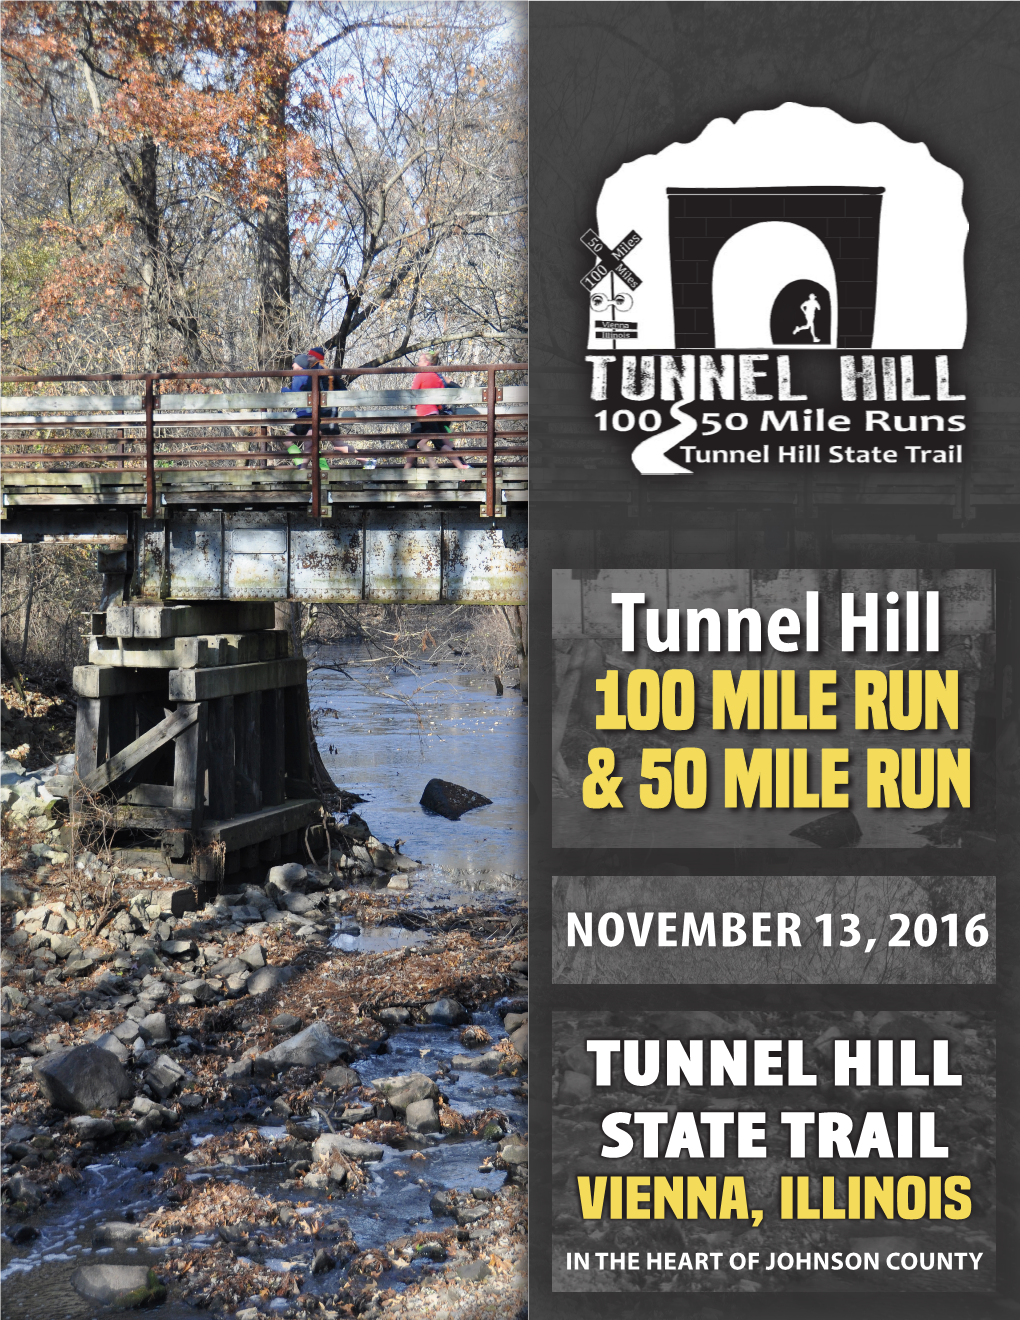 Tunnel Hill 100 MILE RUN & 50 MILE RUN